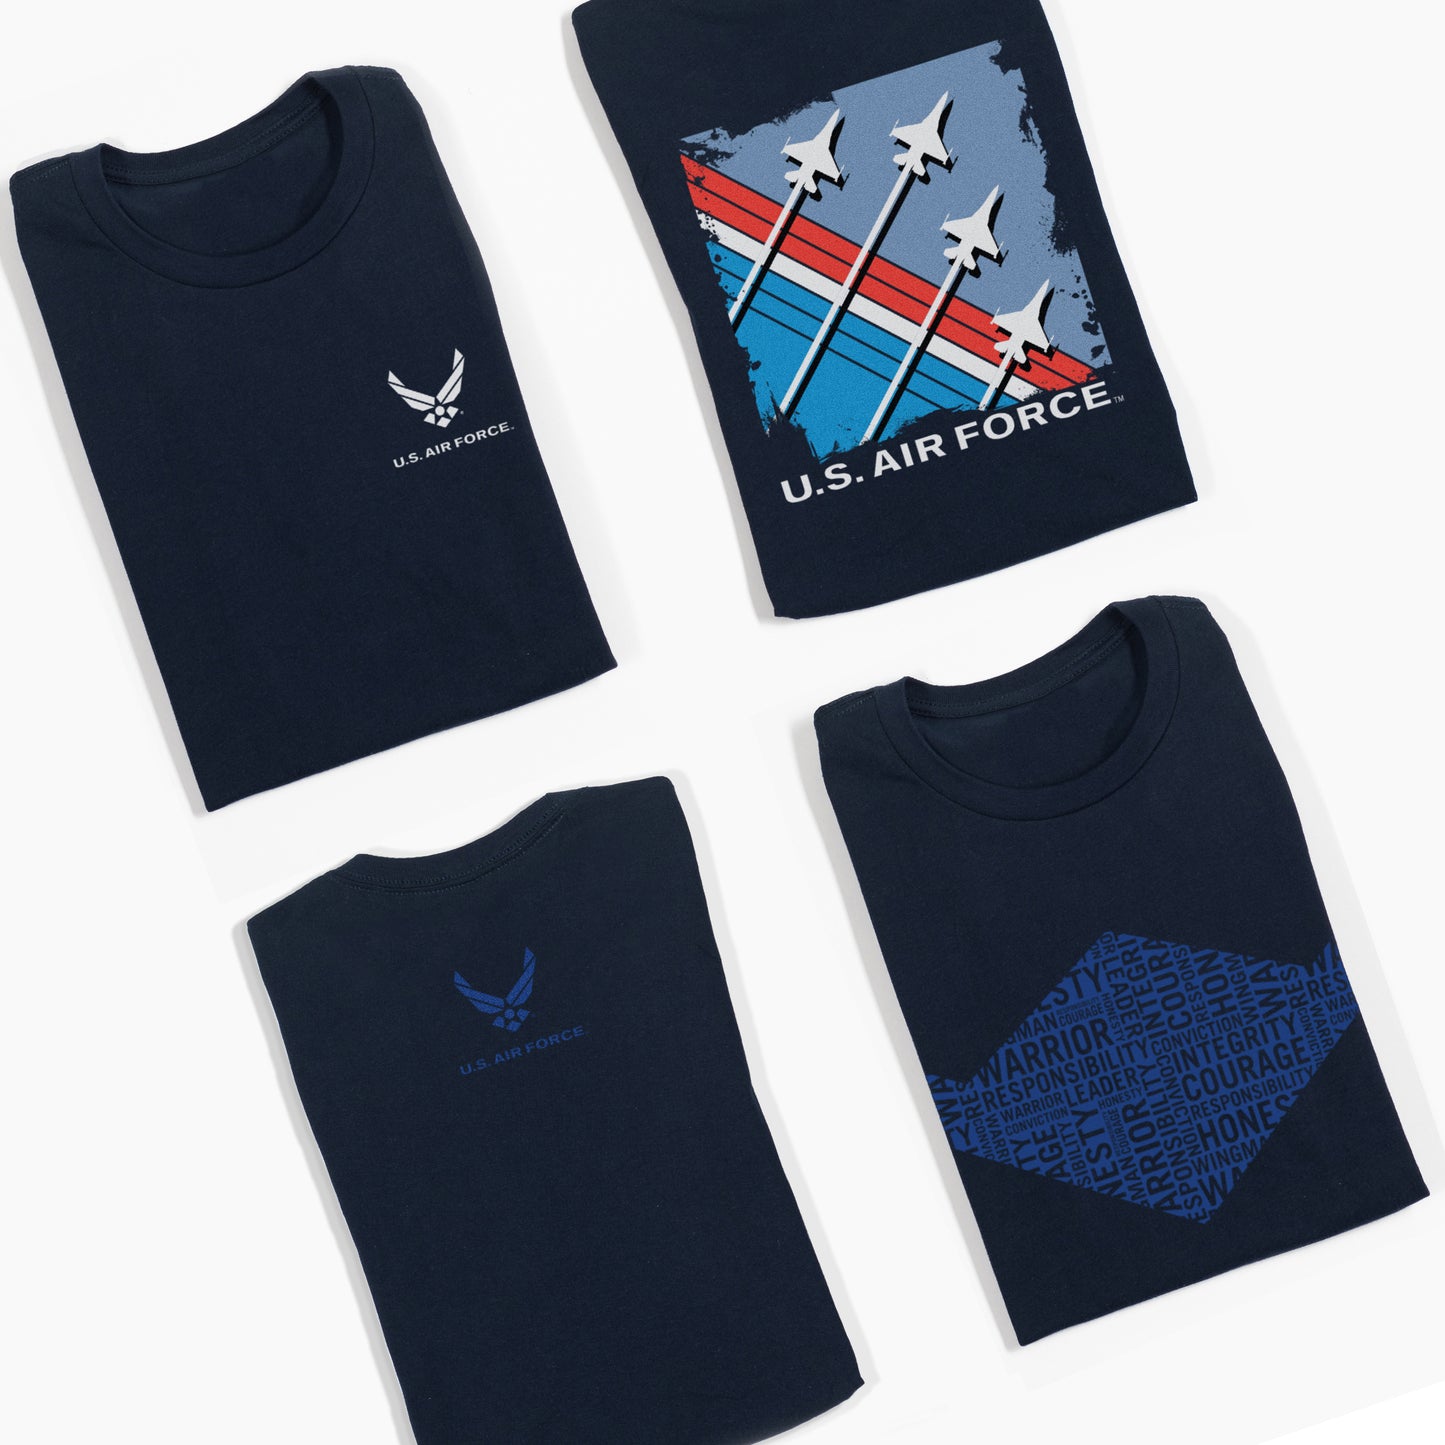 Air Force Shirts - Military Shirts 